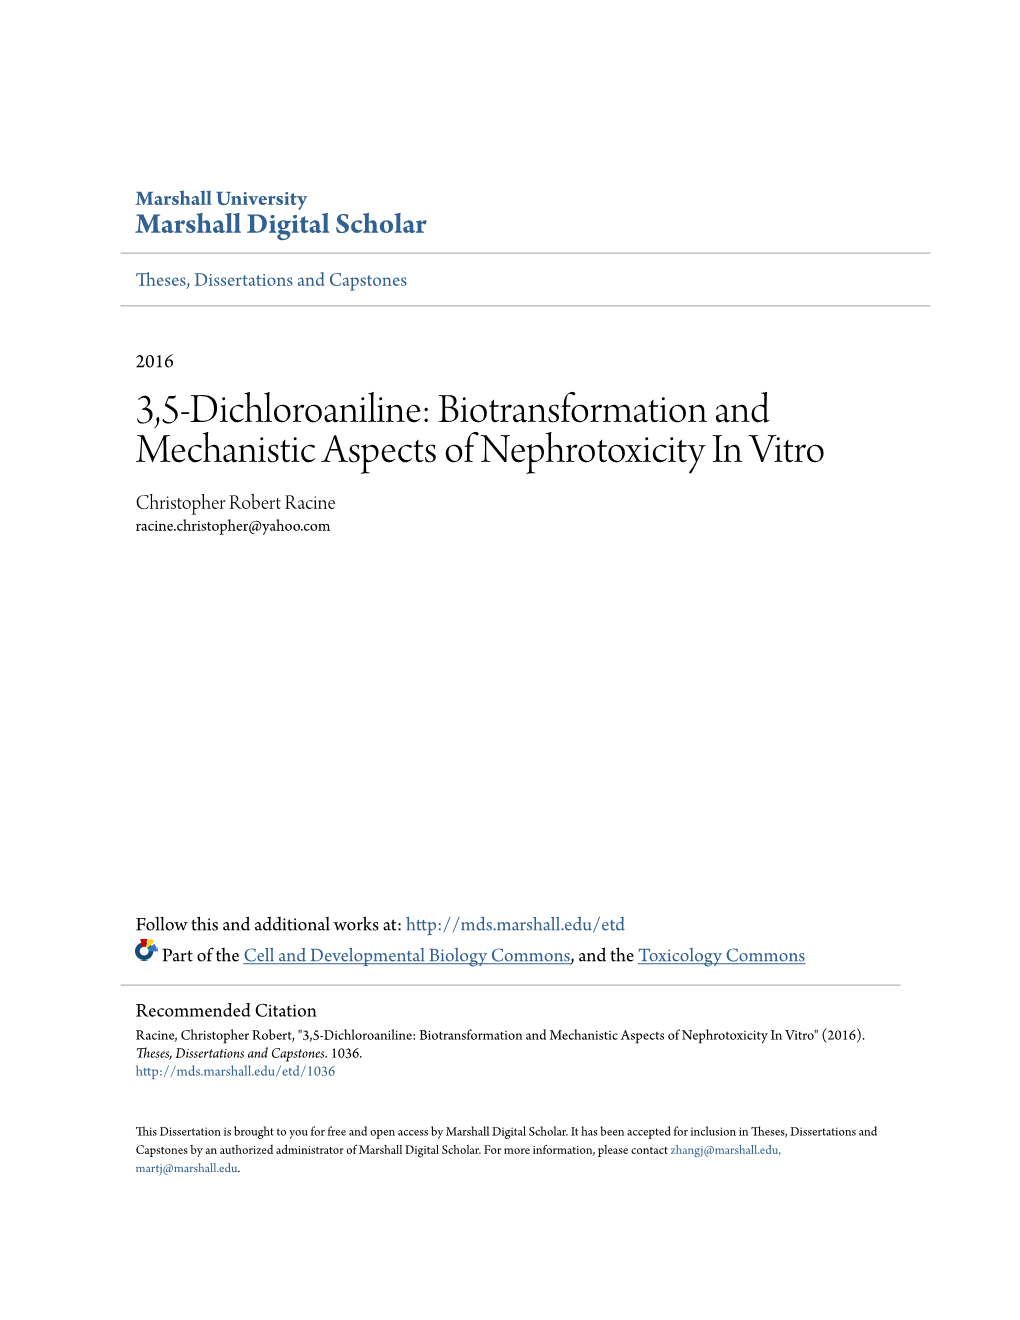 3,5-Dichloroaniline: Biotransformation and Mechanistic Aspects of Nephrotoxicity in Vitro Christopher Robert Racine Racine.Christopher@Yahoo.Com